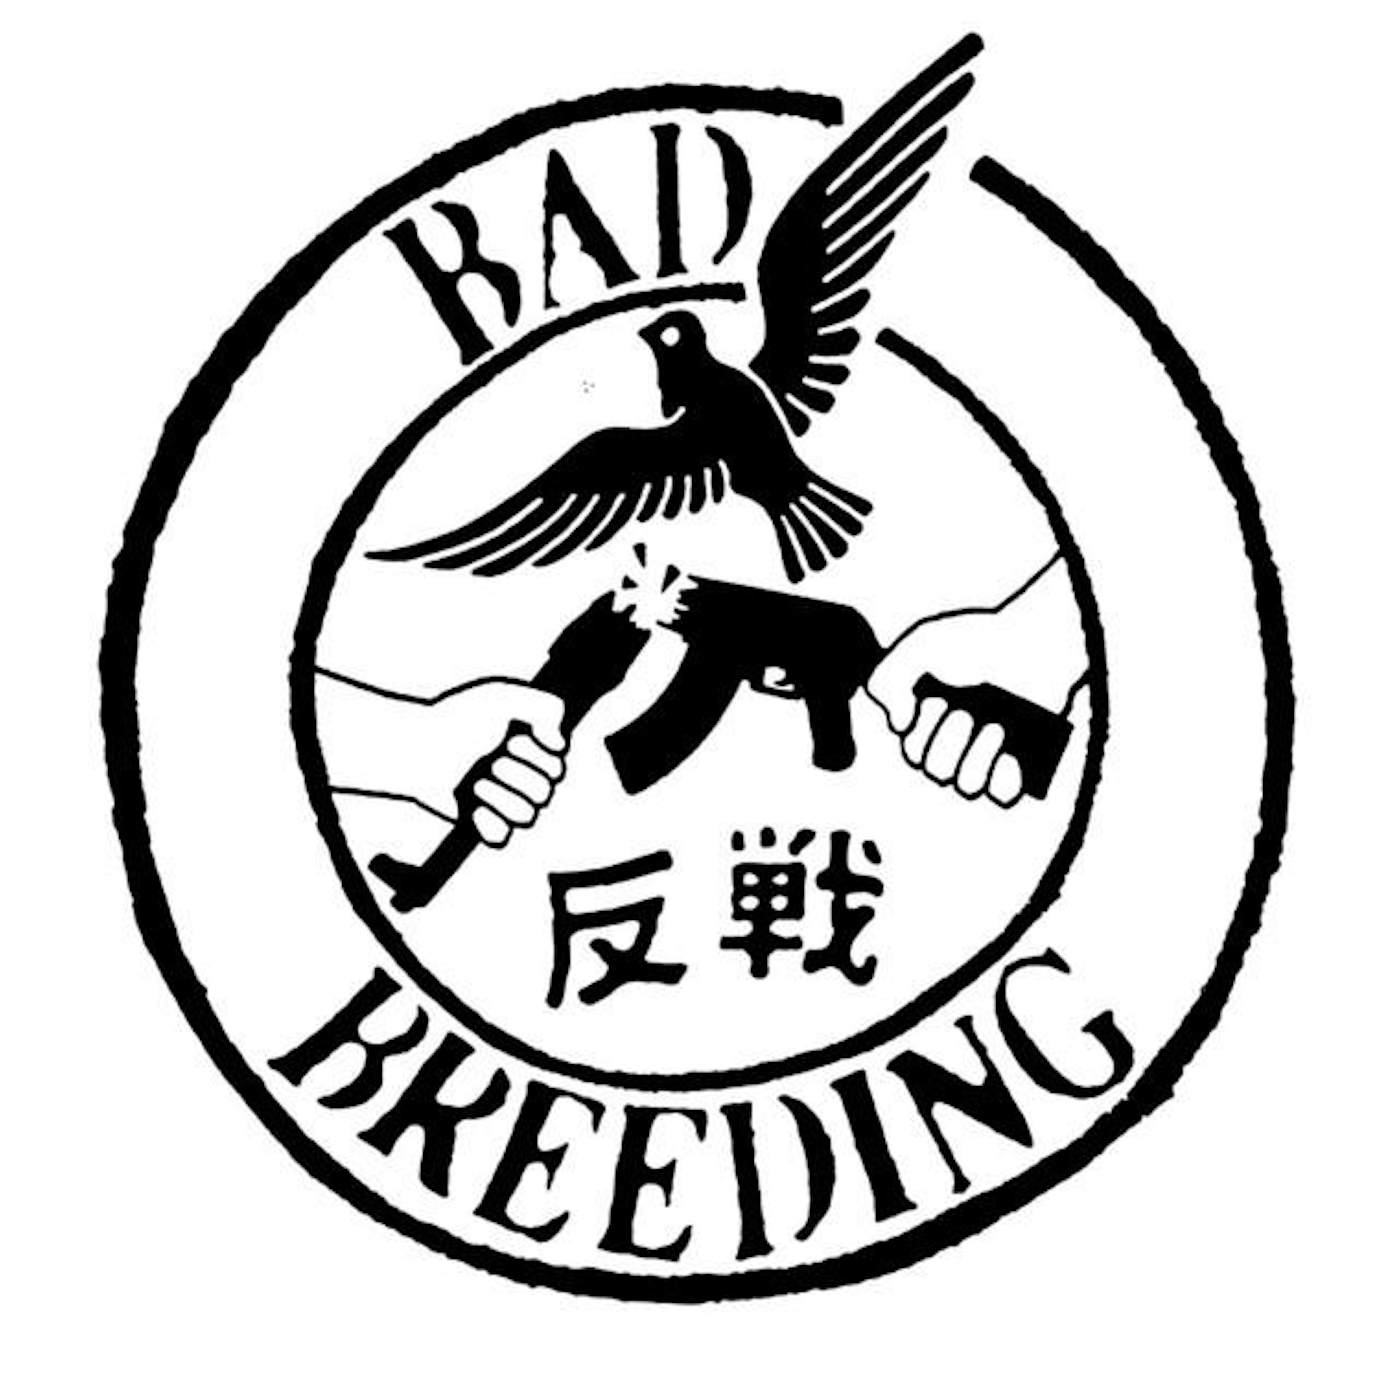 Bad Breeding